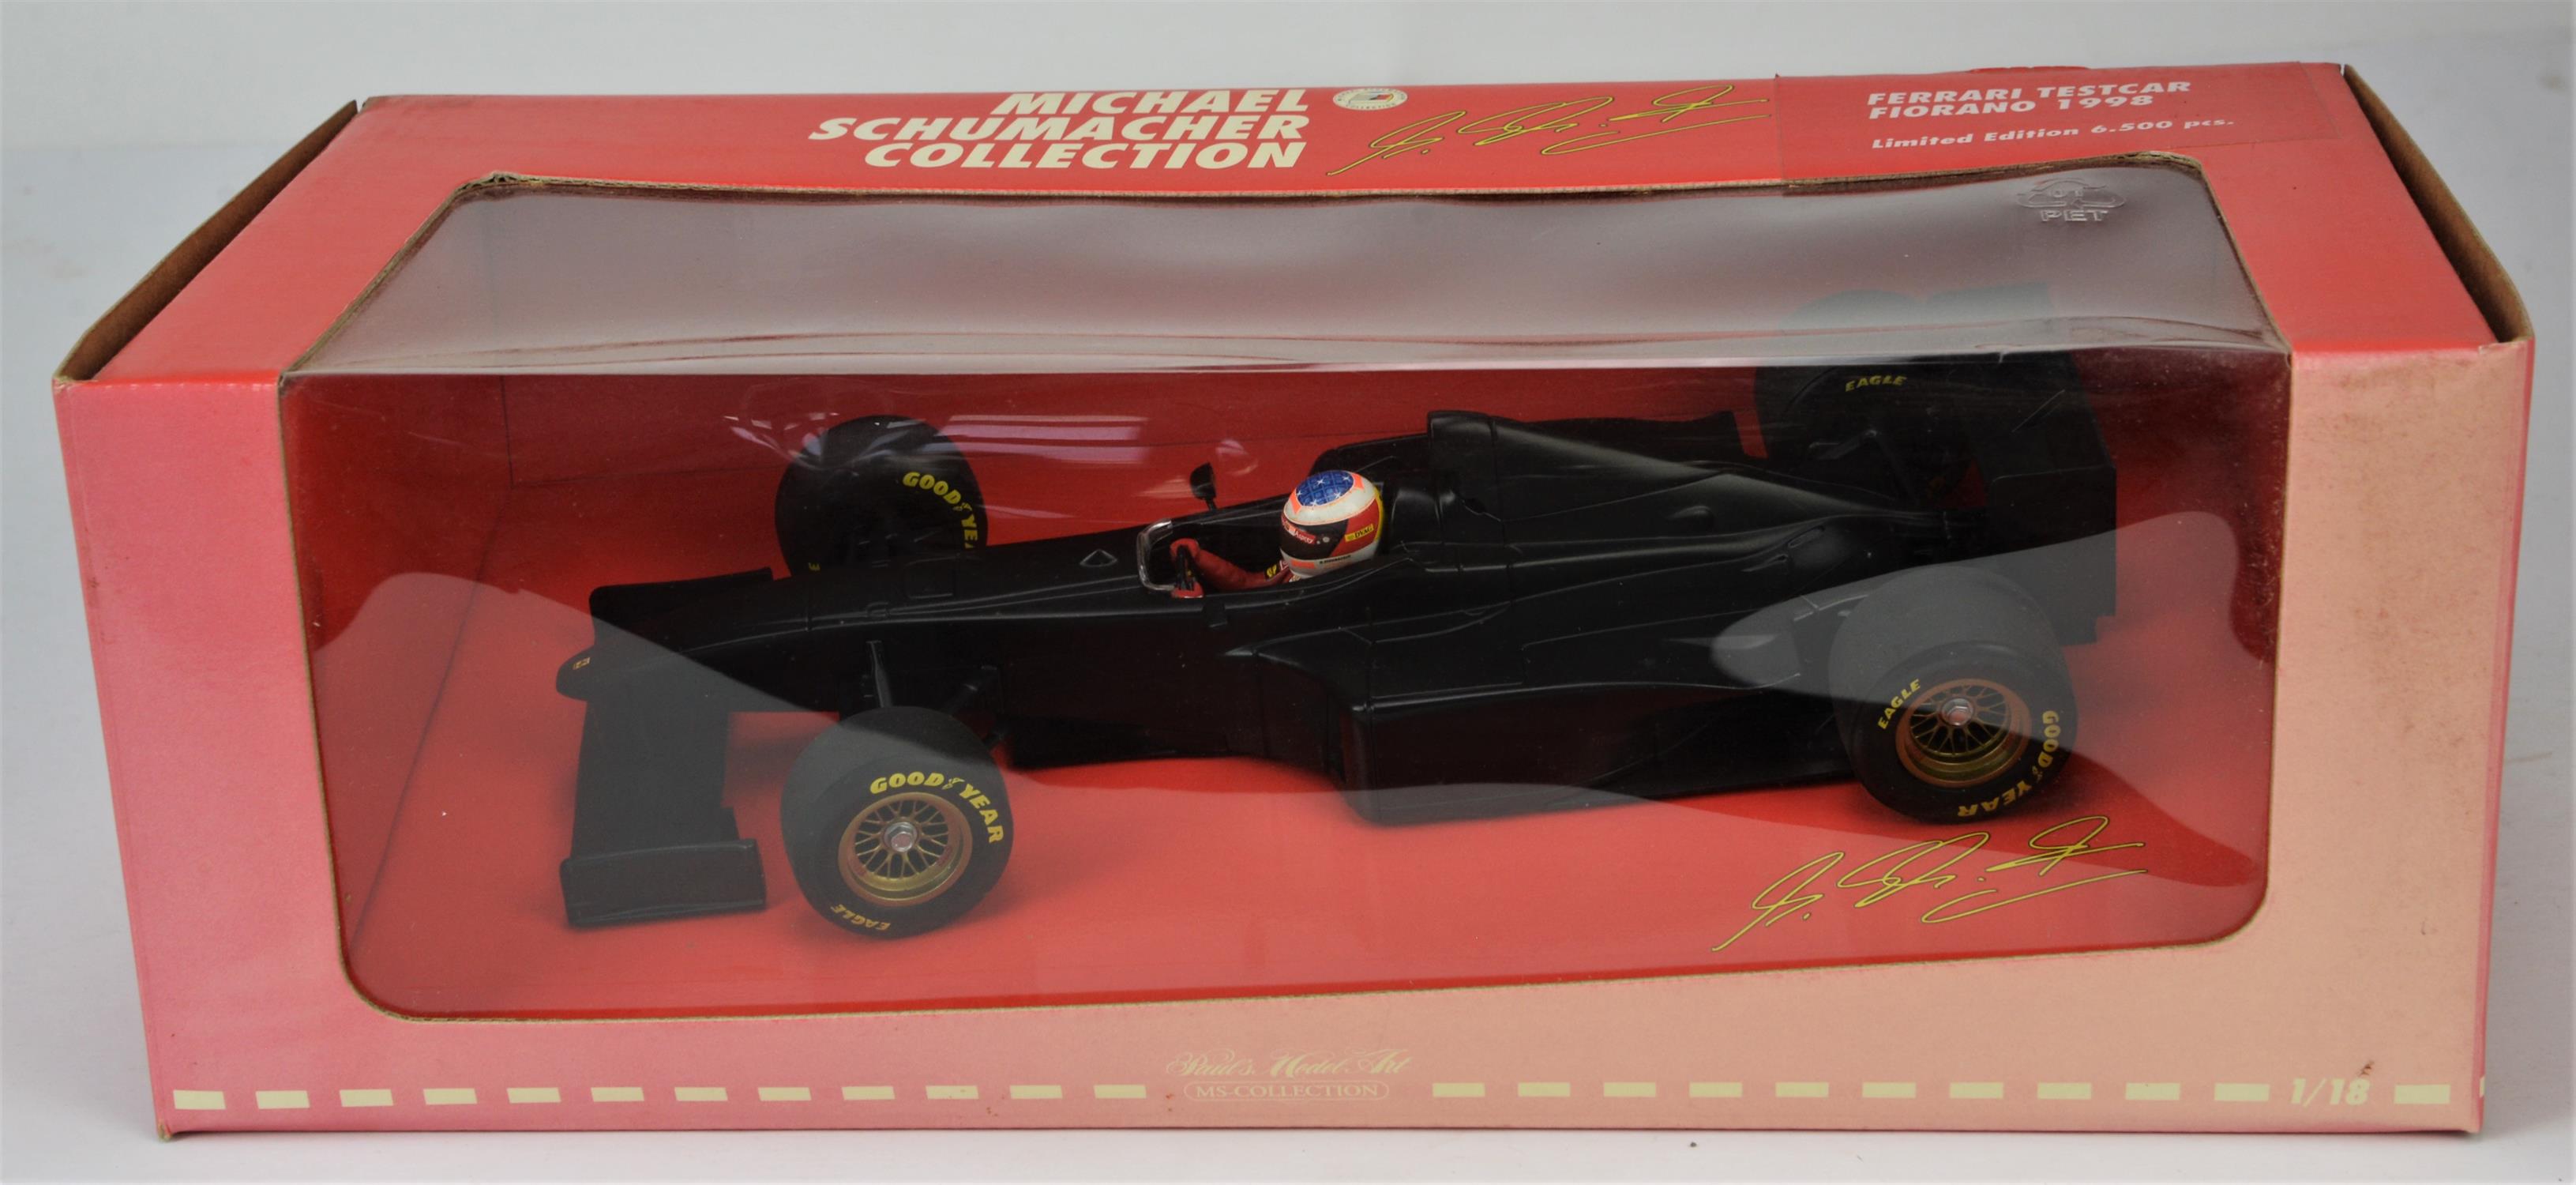 Hot Wheels Racing - Four Michael Schumacher collection, Boxed Mattel Ferrari 1:18 scale models, - Image 2 of 5